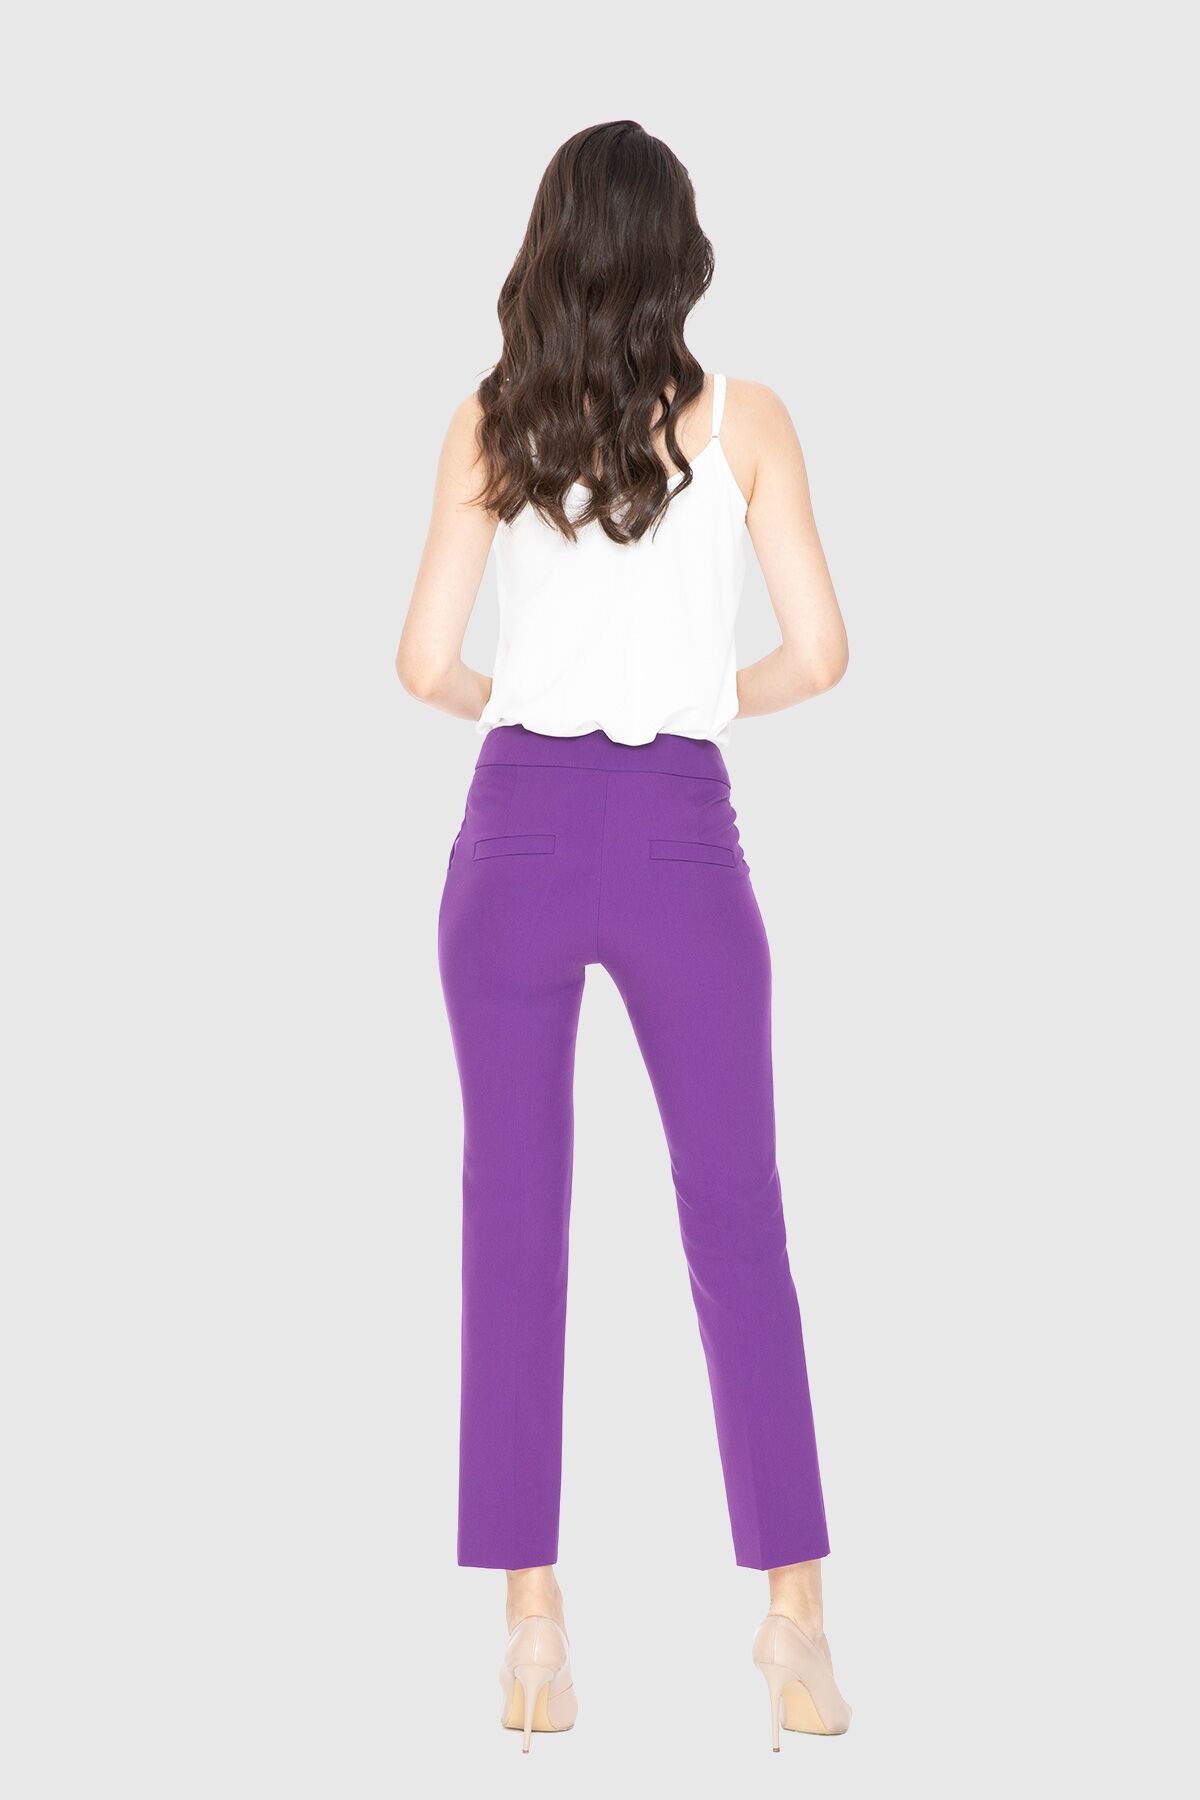 Ankle Length Purple Pants